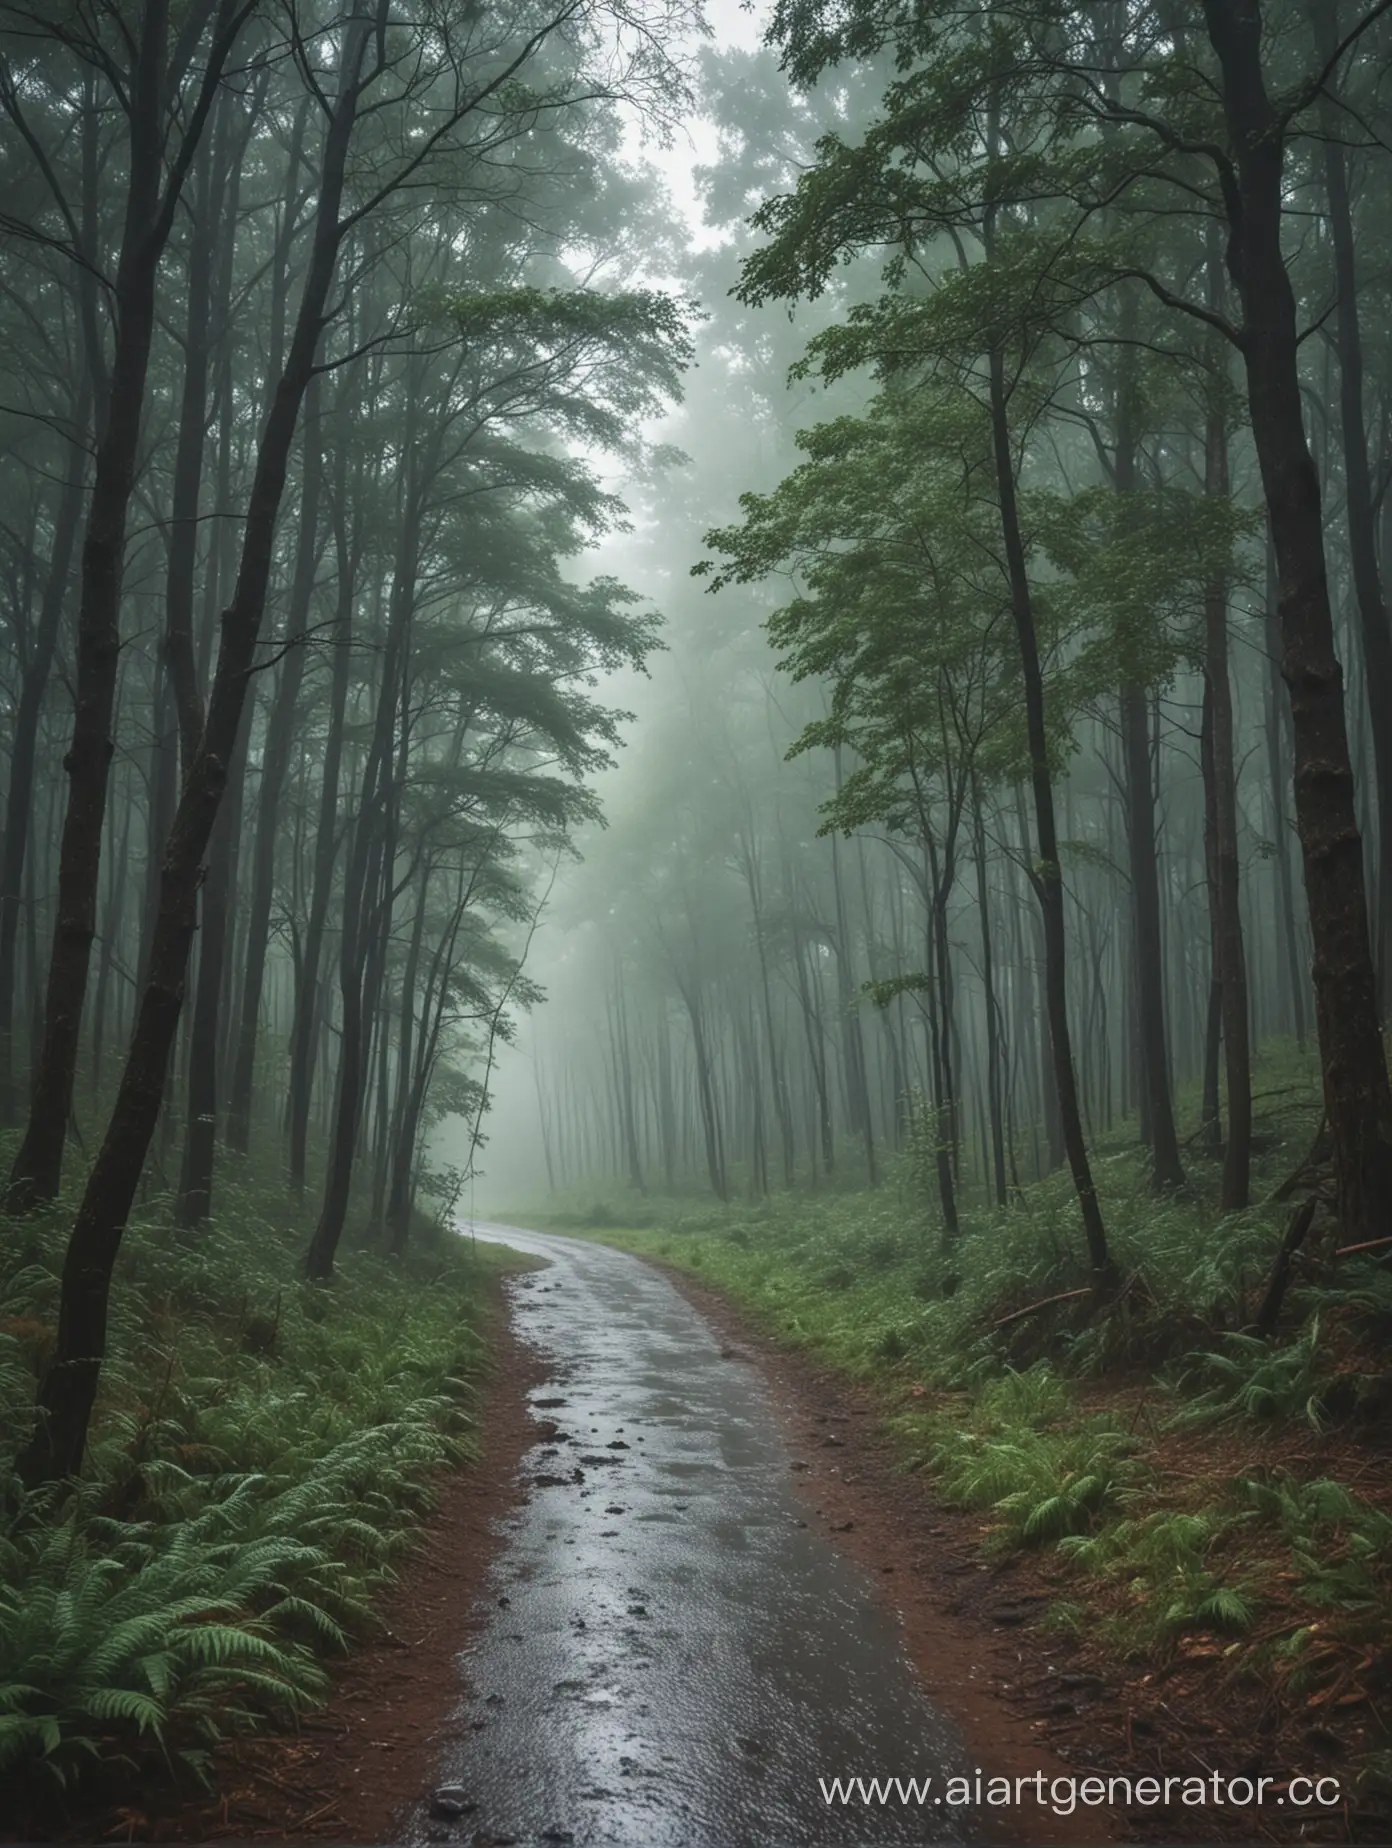 Rainy-Day-Forest-Landscape-Serene-Nature-Scene-in-the-Rain